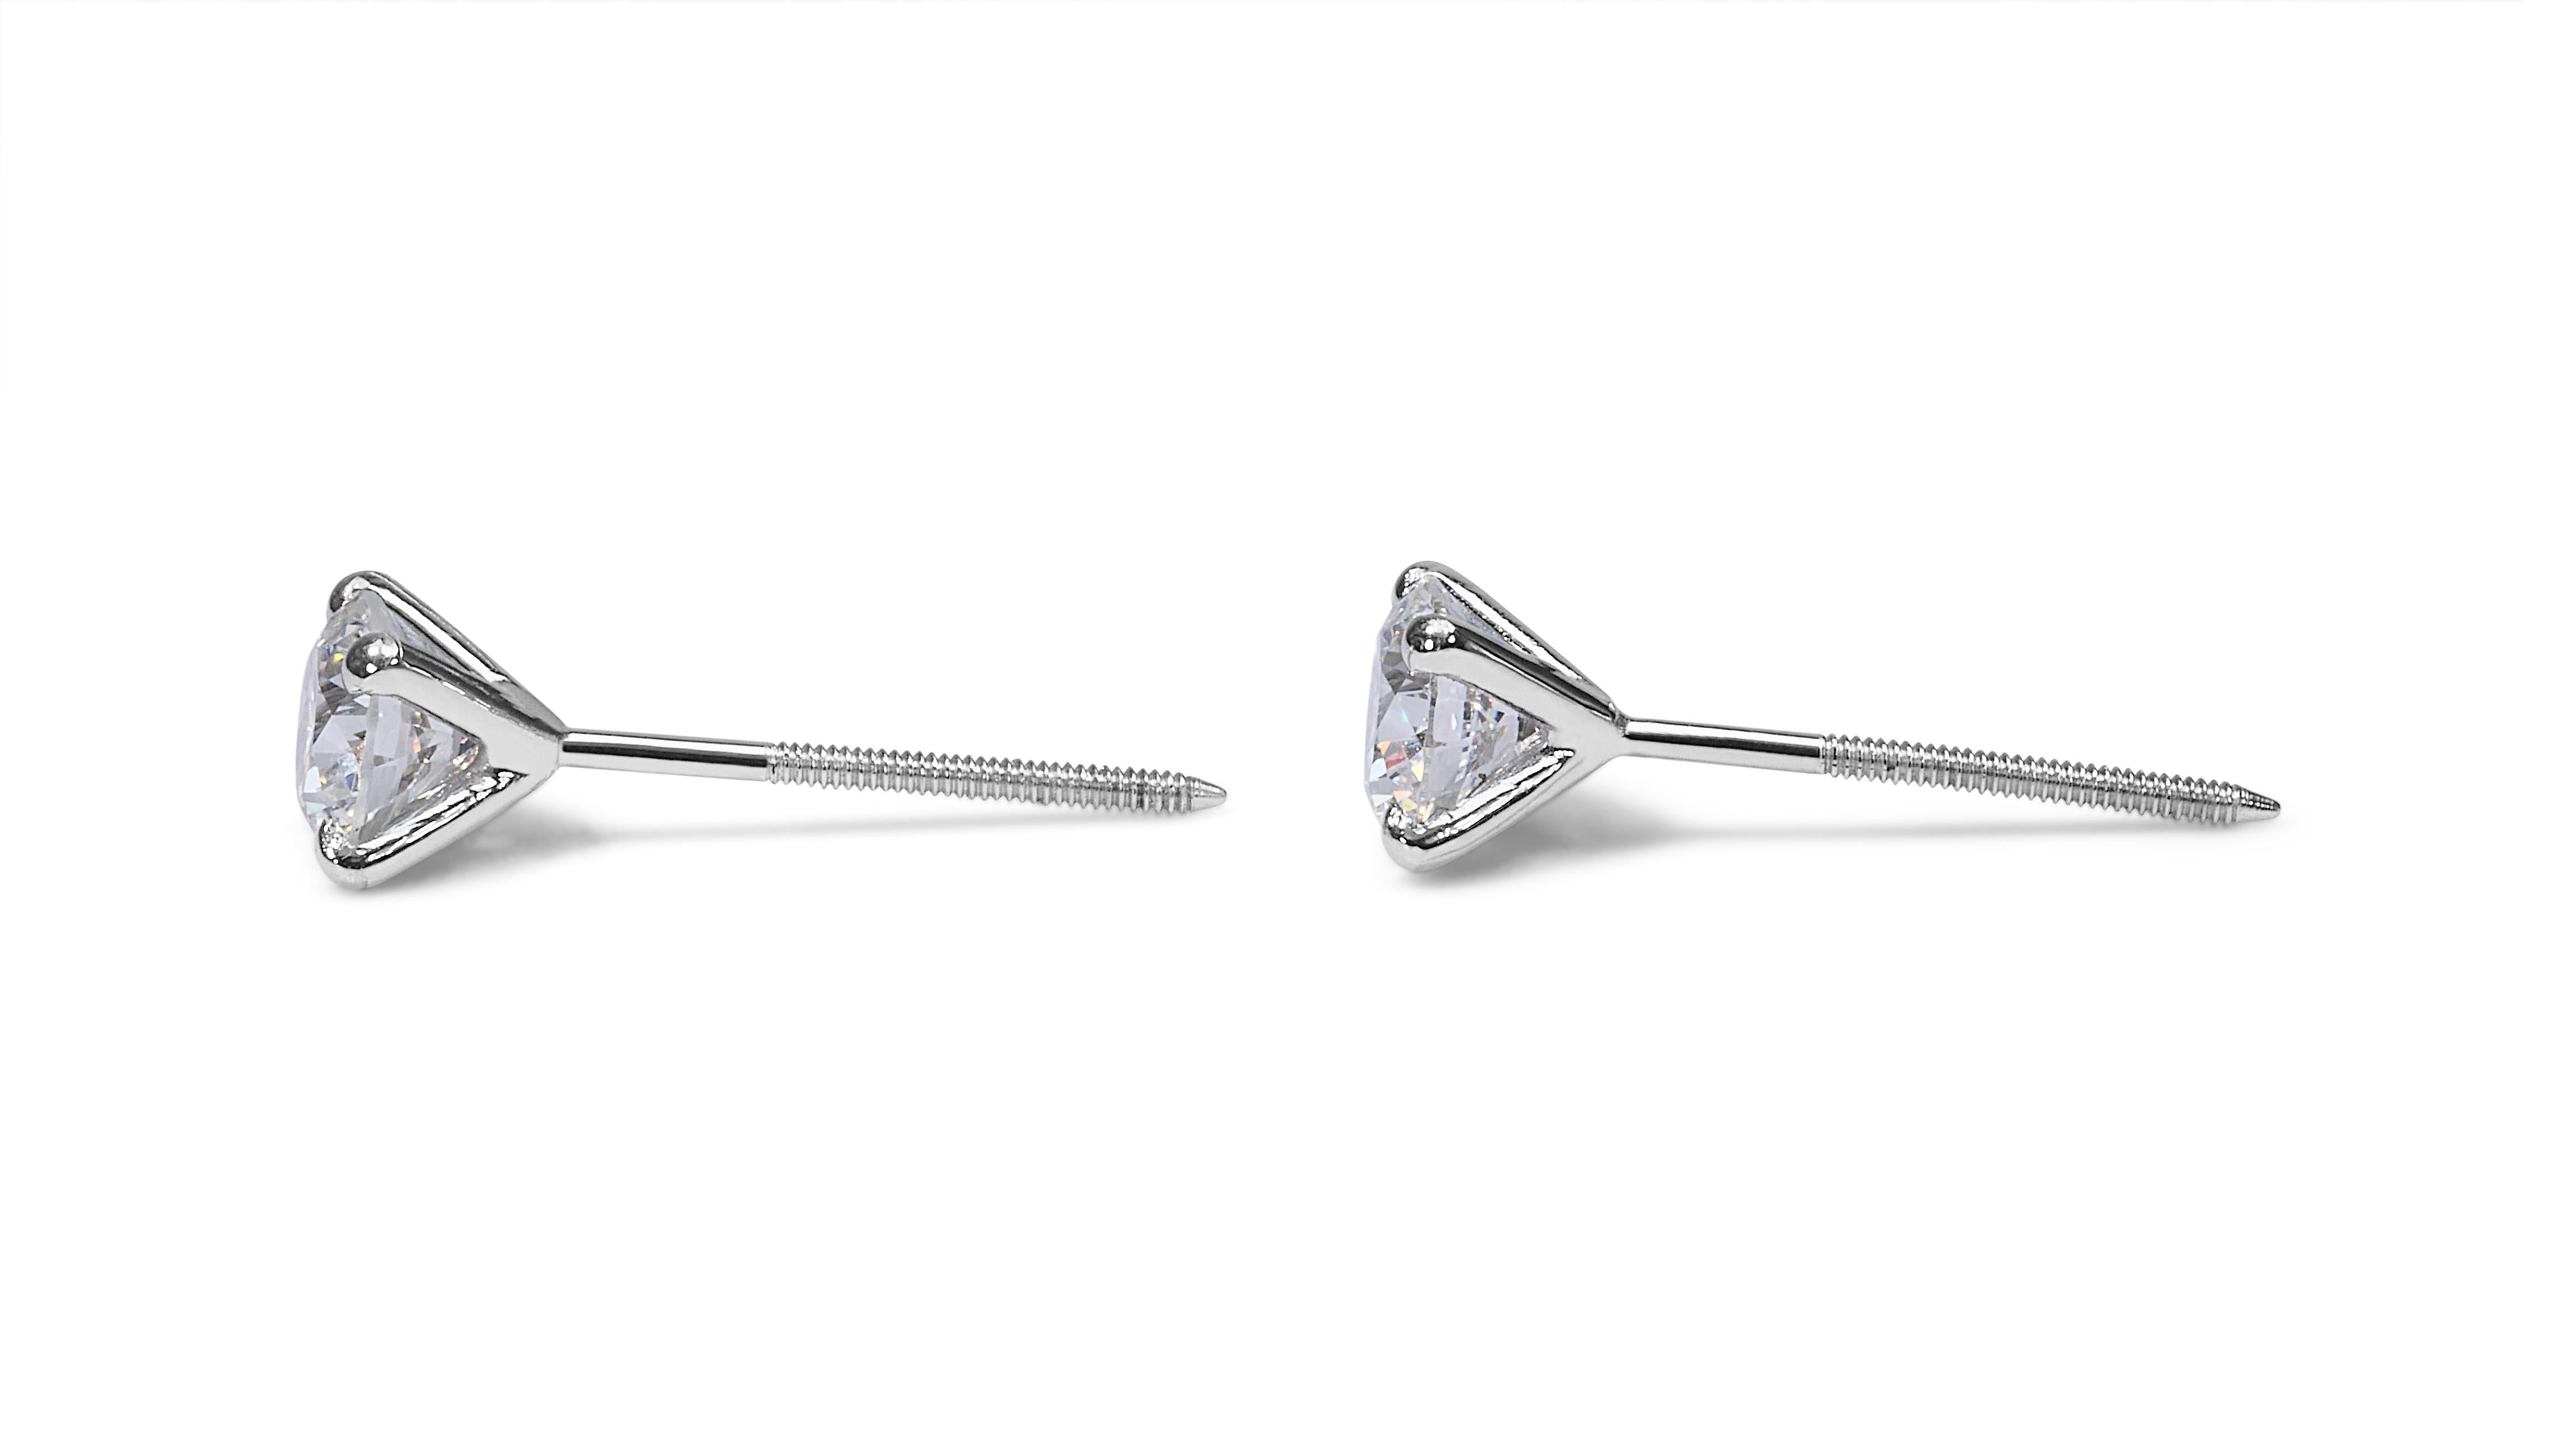 Mesmerizing 2.01ct Diamond Stud Earrings in 18k White Gold - GIA Certified  For Sale 1